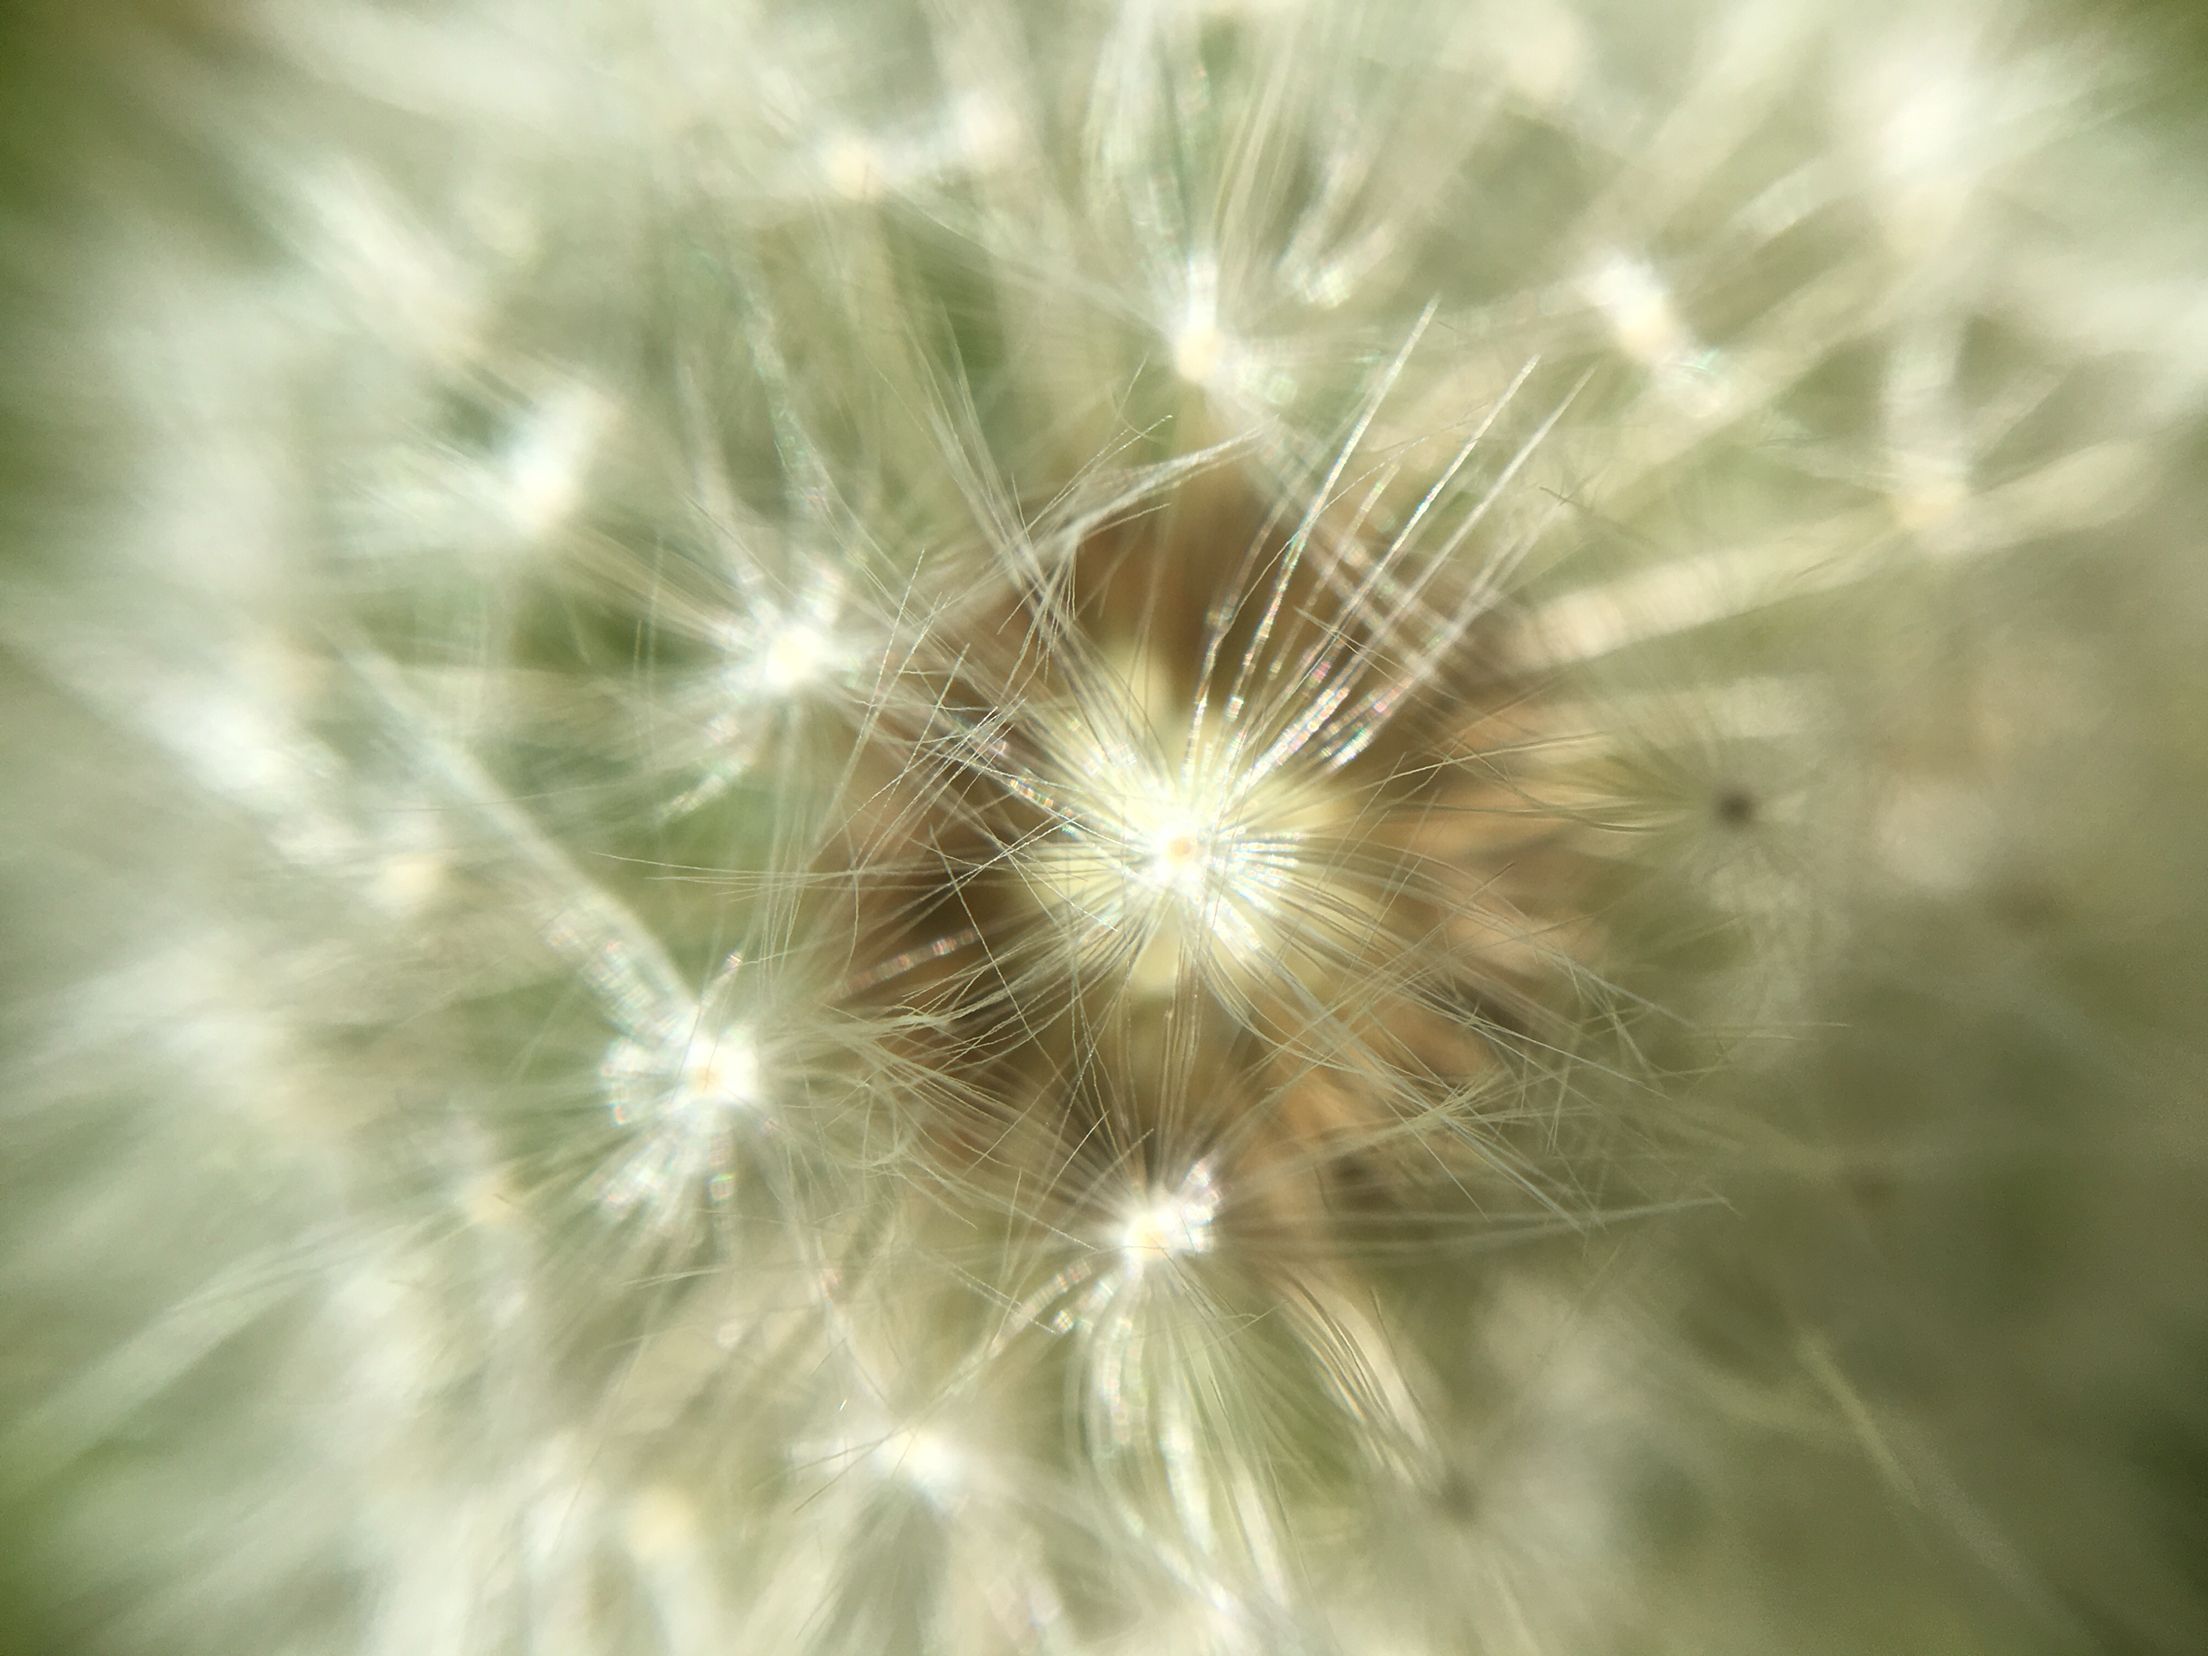 Macro lenses dandelion puff | Photography | Pinterest | Lenses and ...